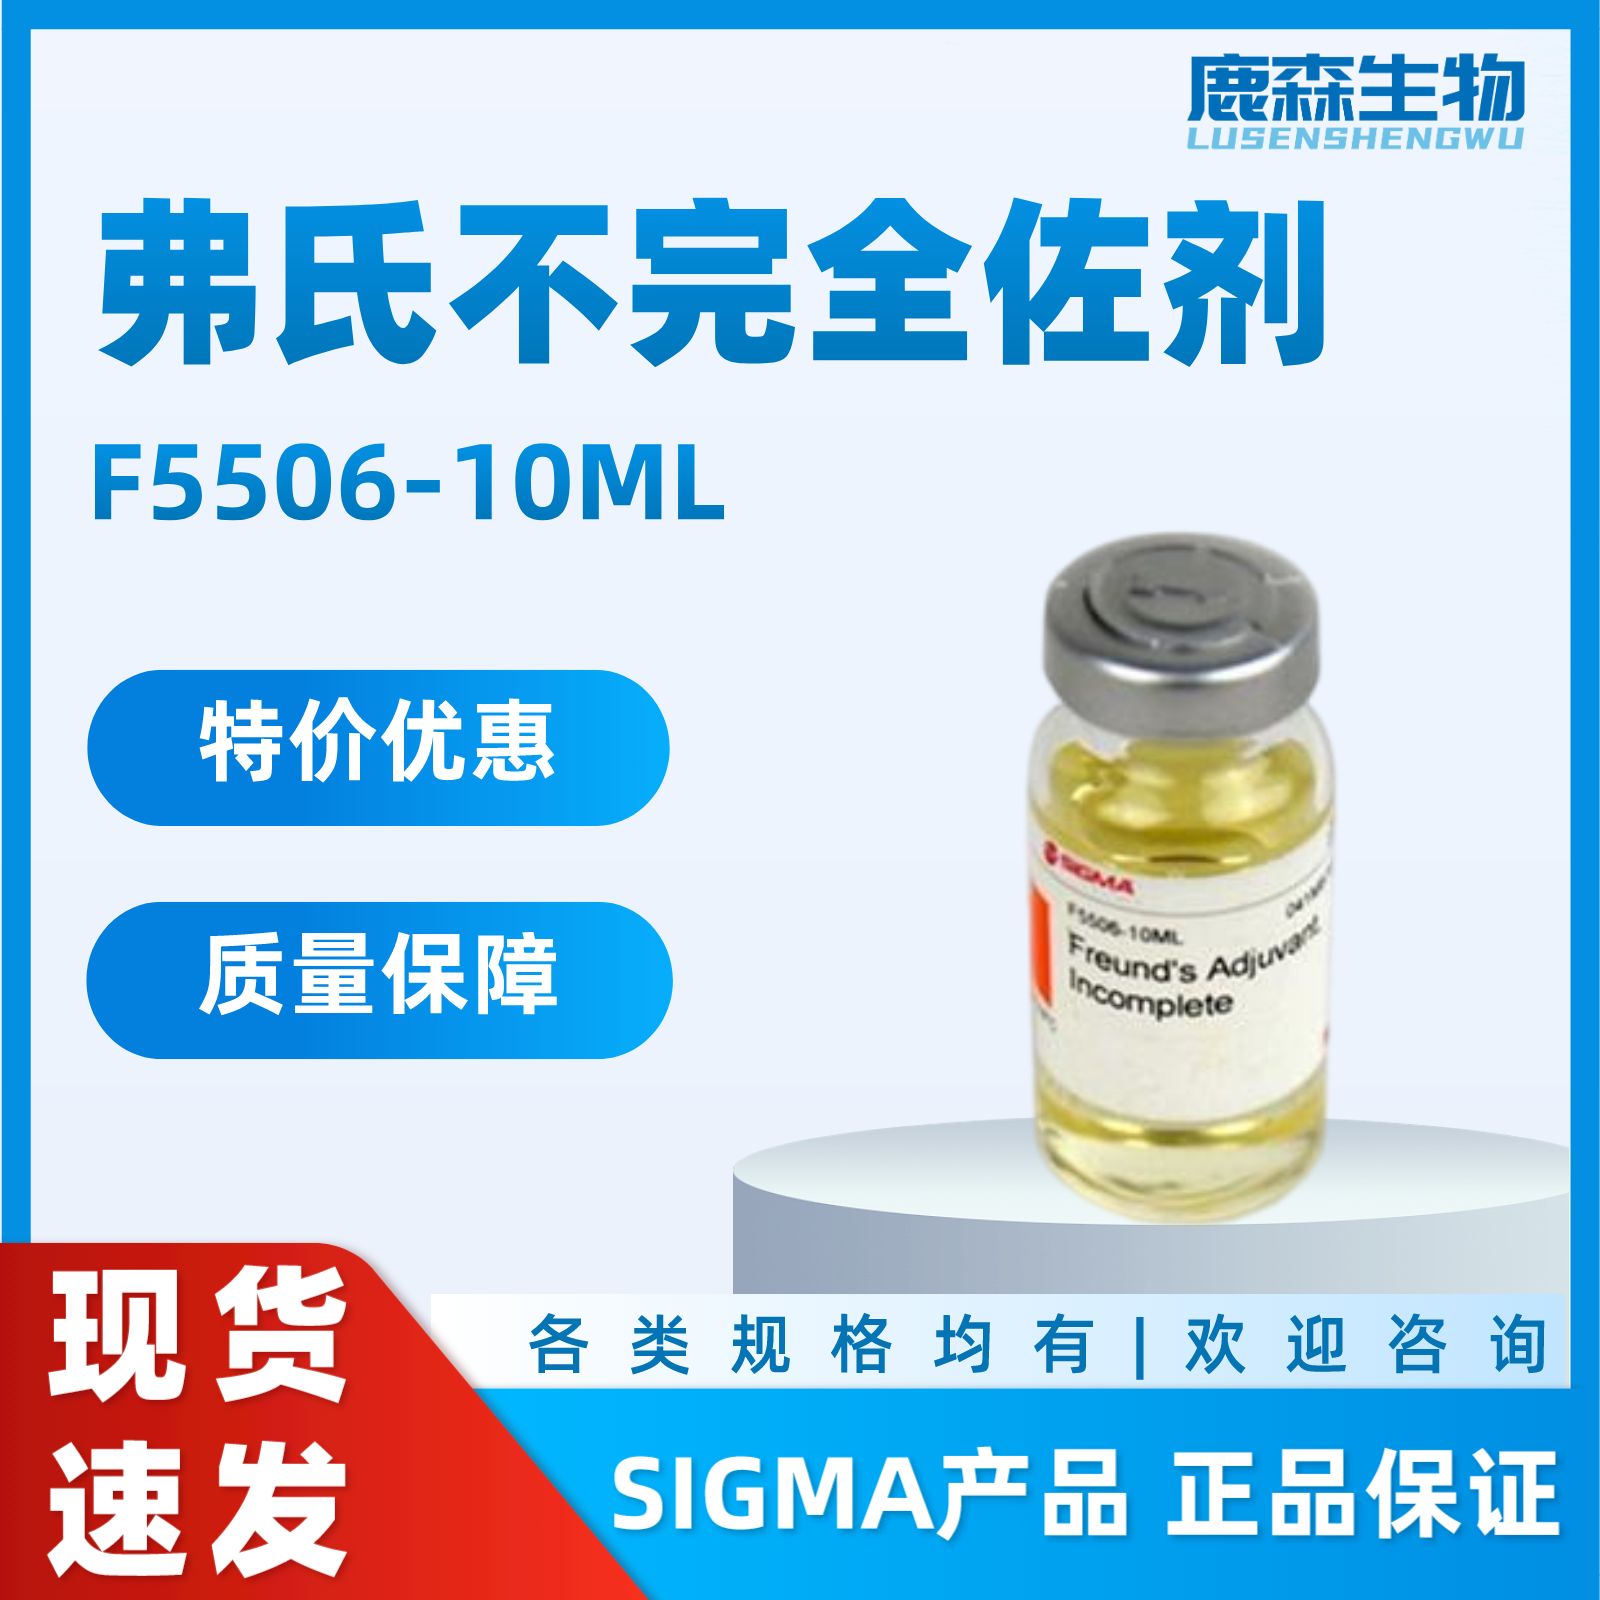 SIGMA 弗氏不完全佐剂，F5506-10ml